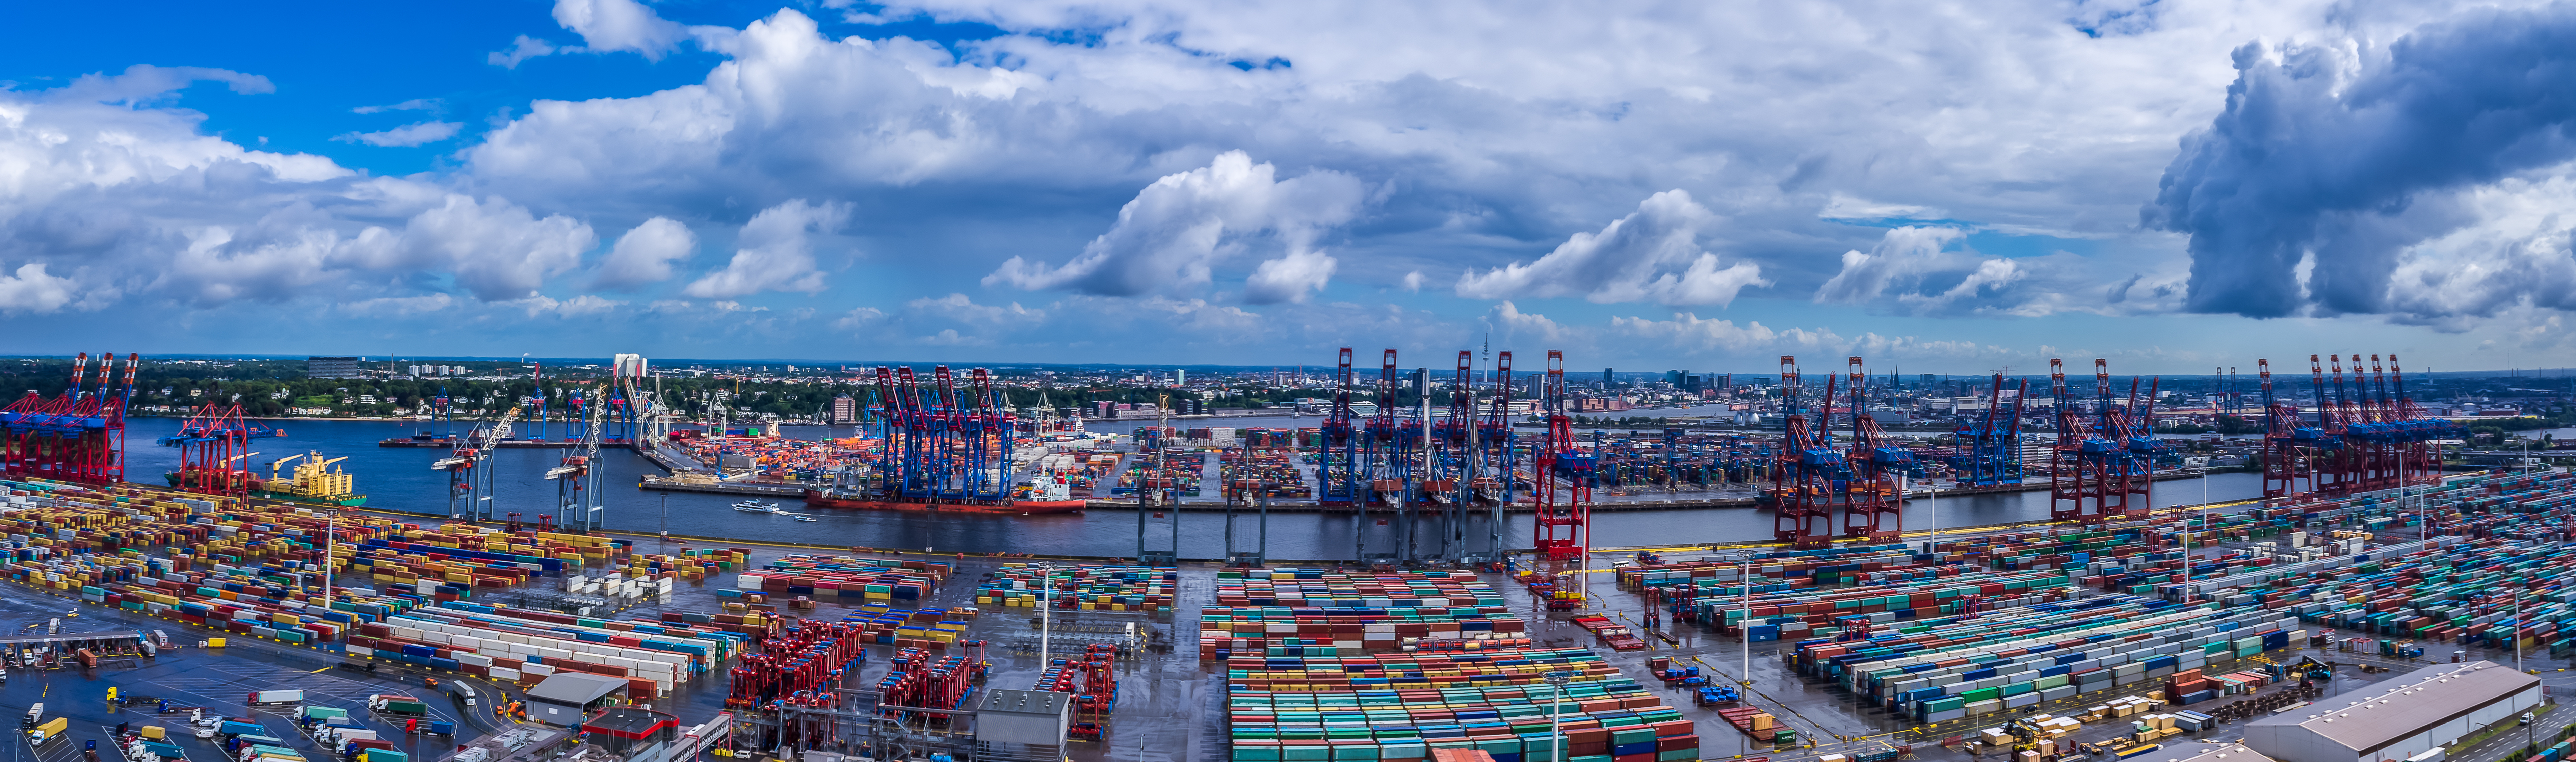 Panorama Luftbild Hafen Hamburg 